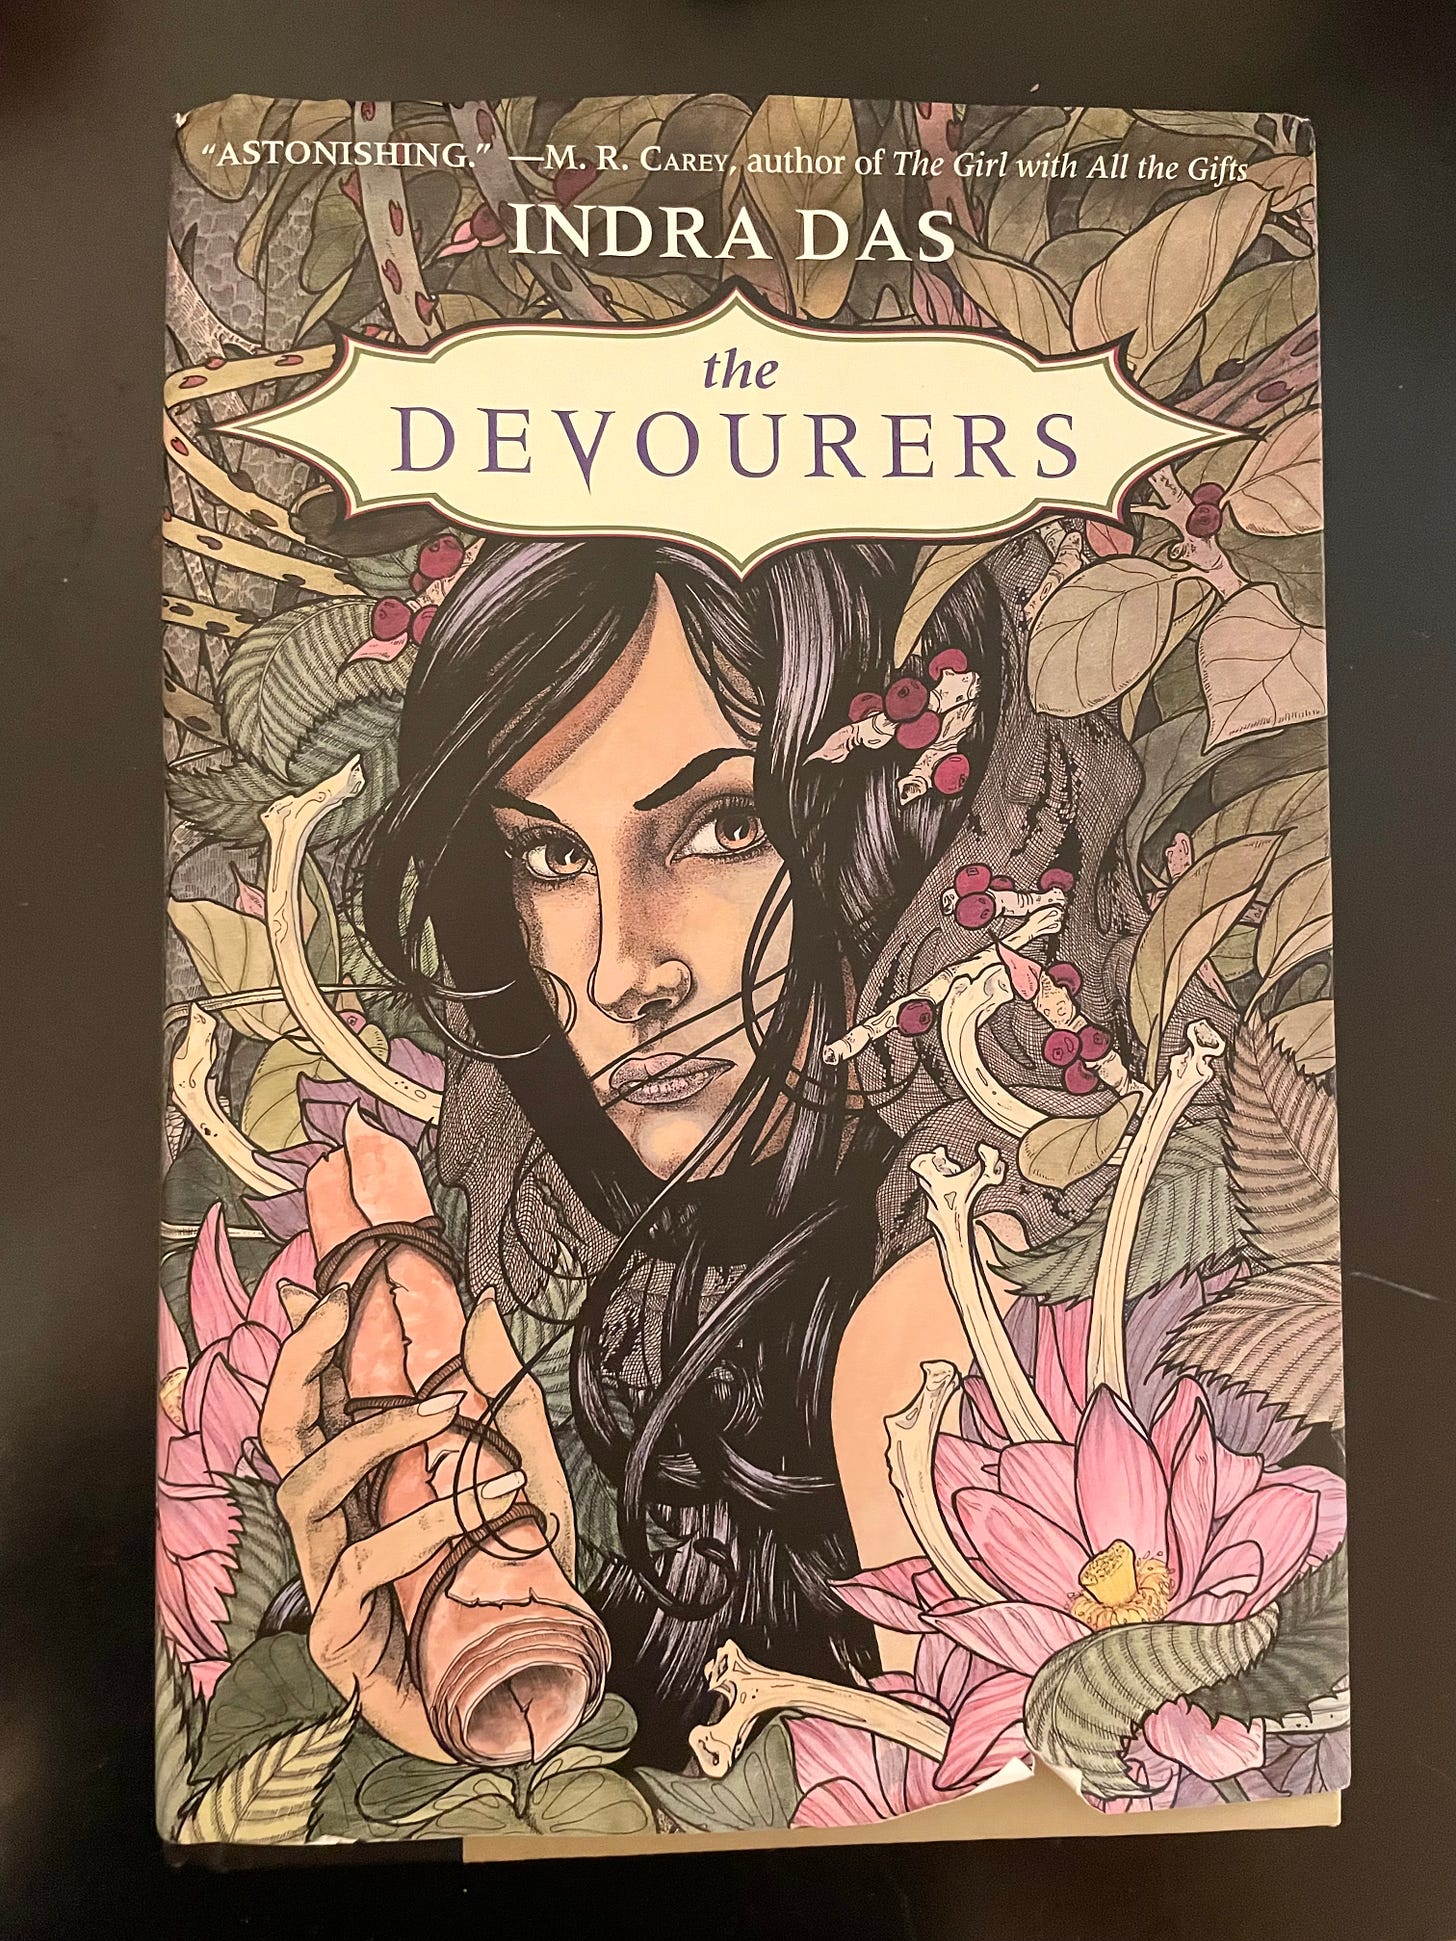 book: 'The Devourers' by Indra Das